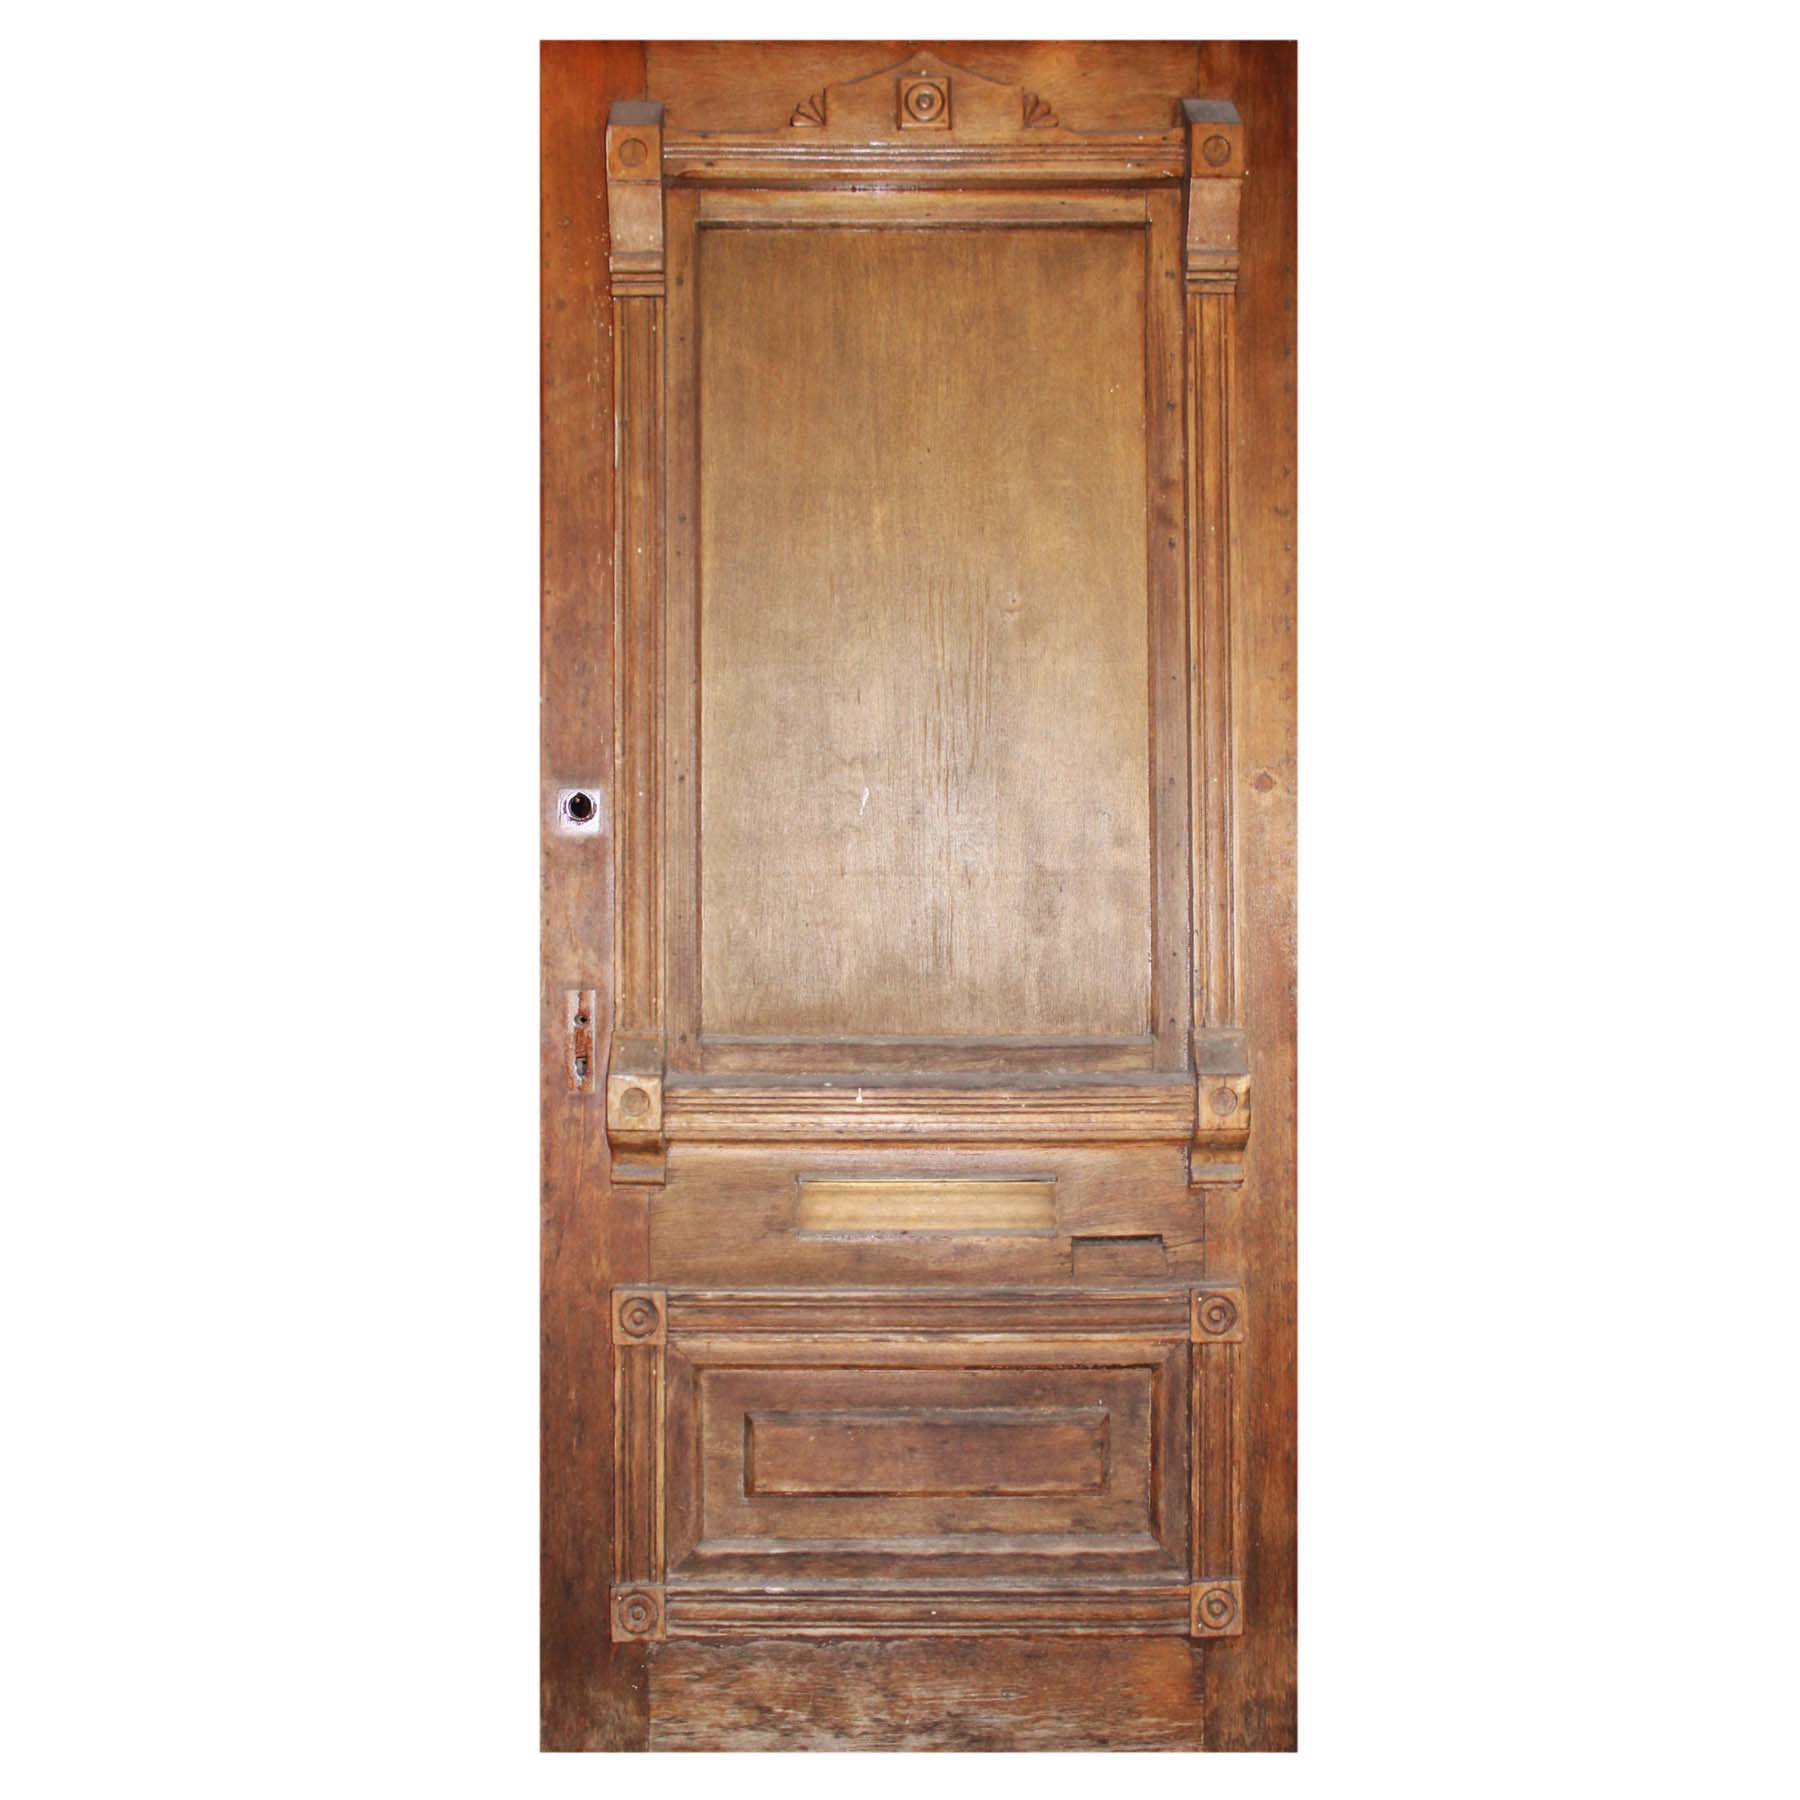 SOLD Salvaged 39” Eastlake Door with Carved Details-0